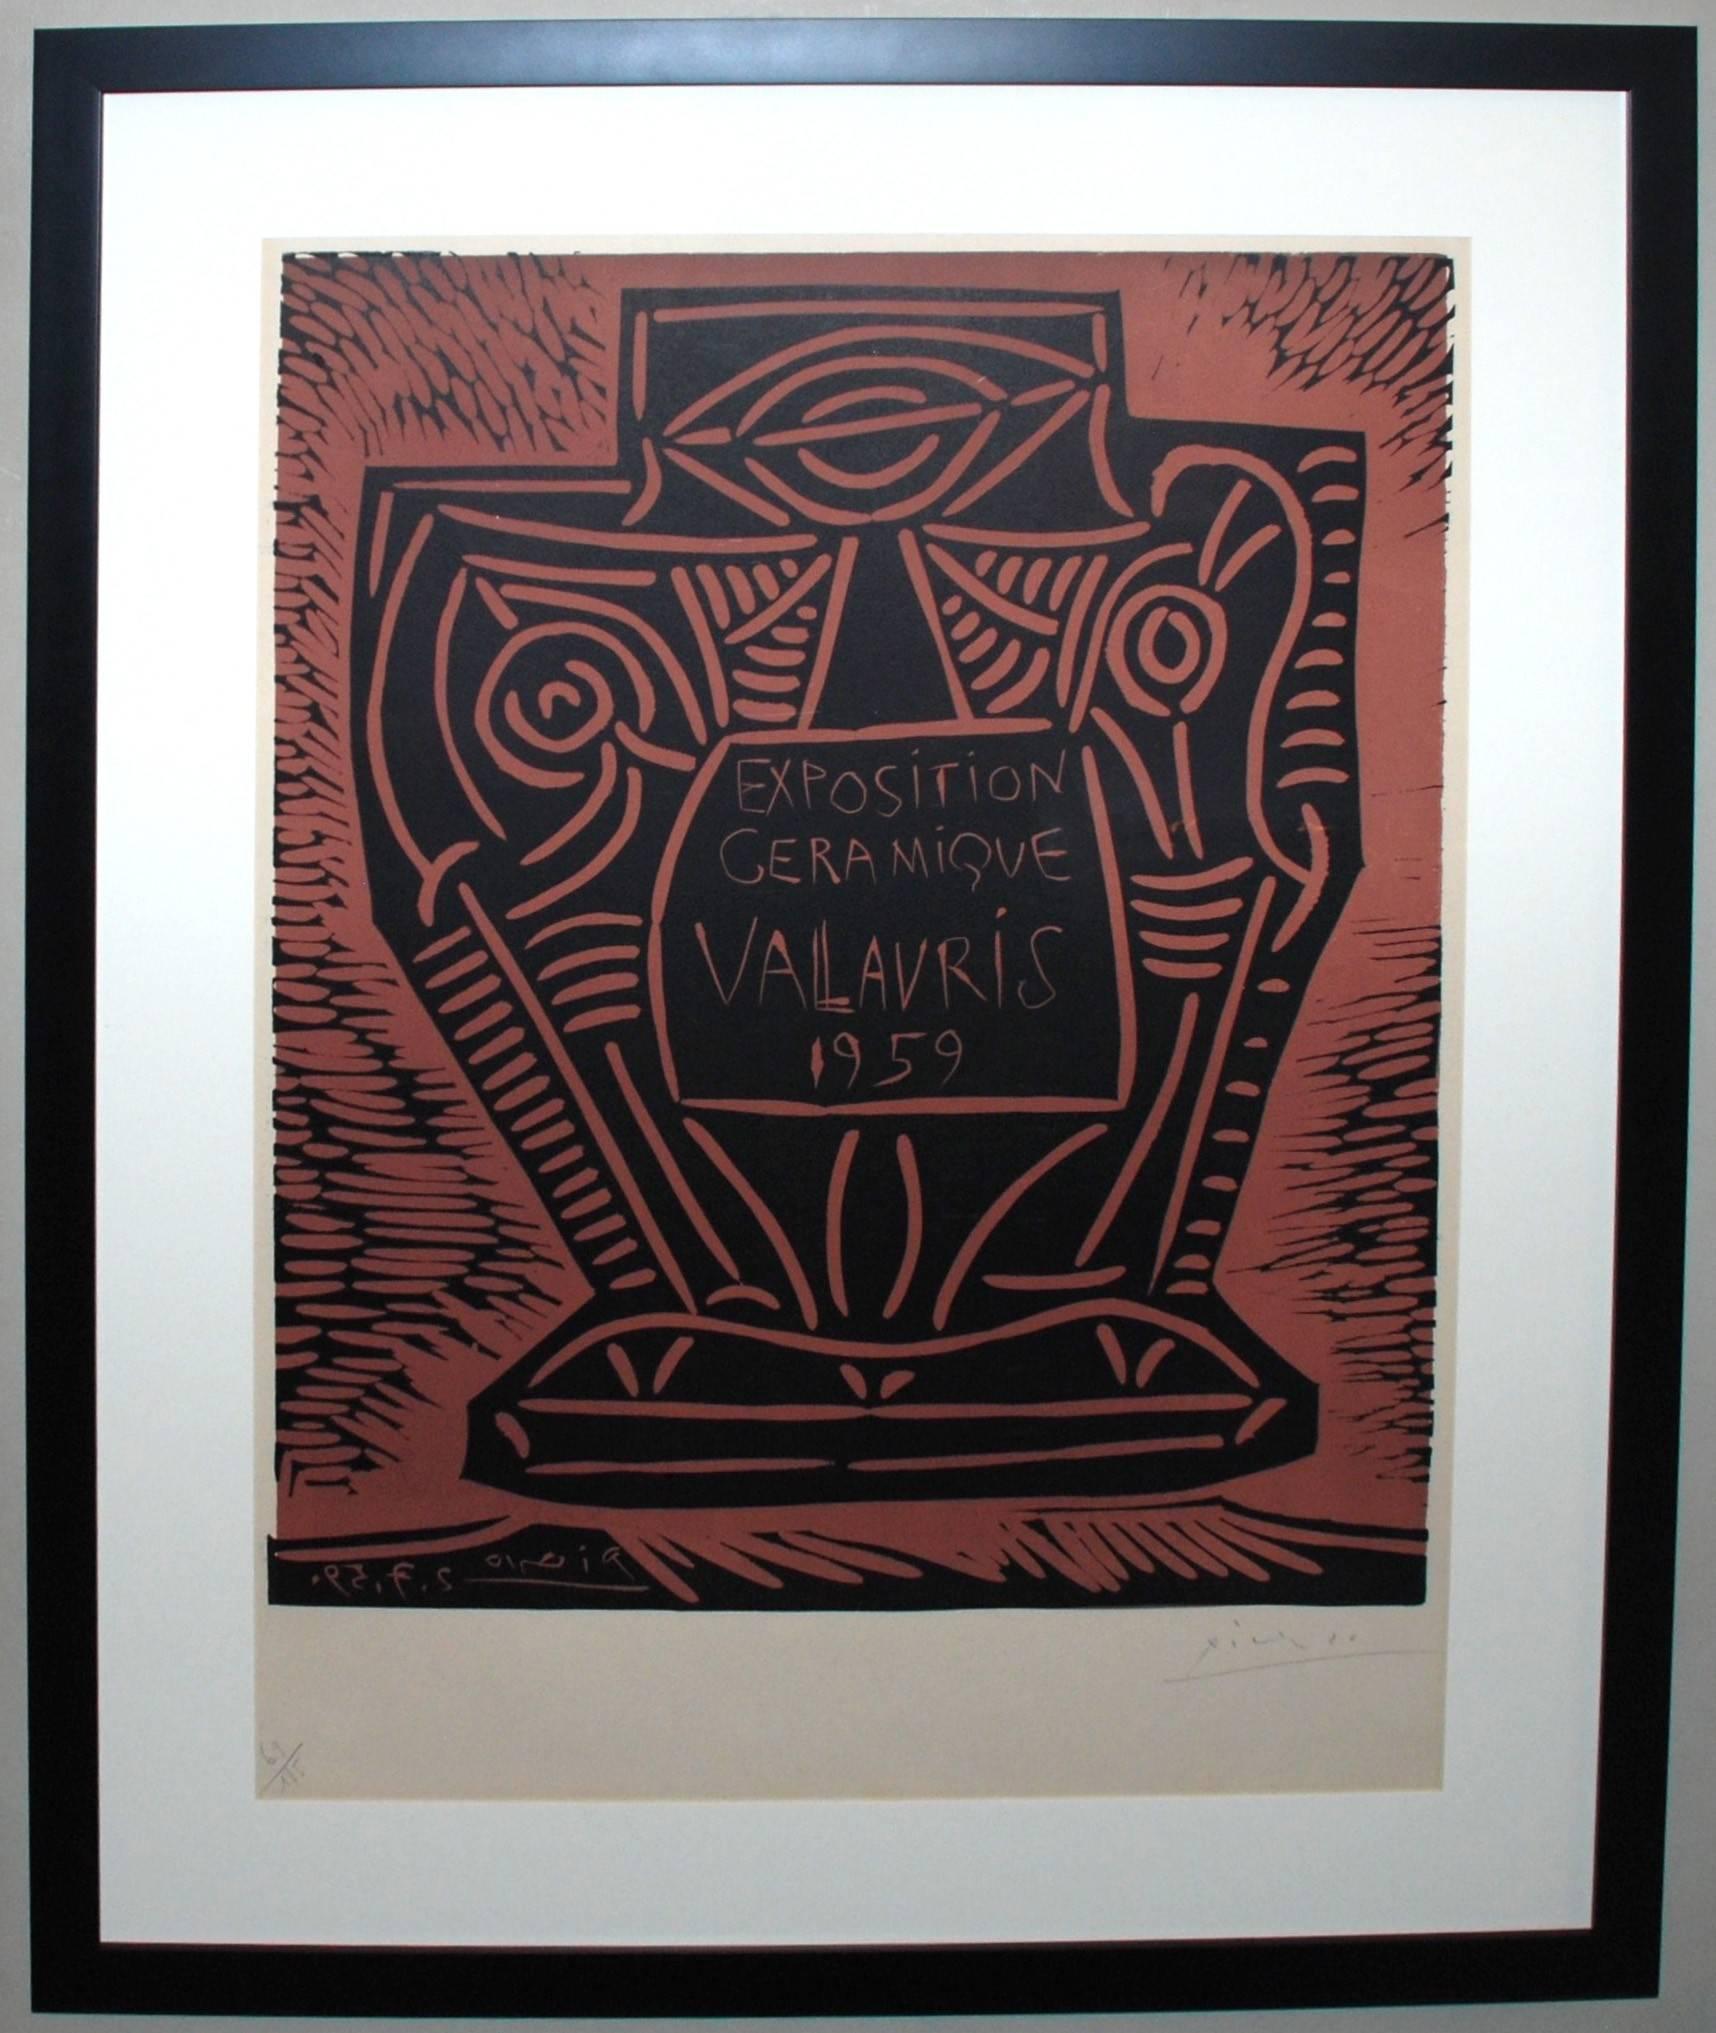 Exposition Ceramique Vallauris 1959 II - Print by Pablo Picasso